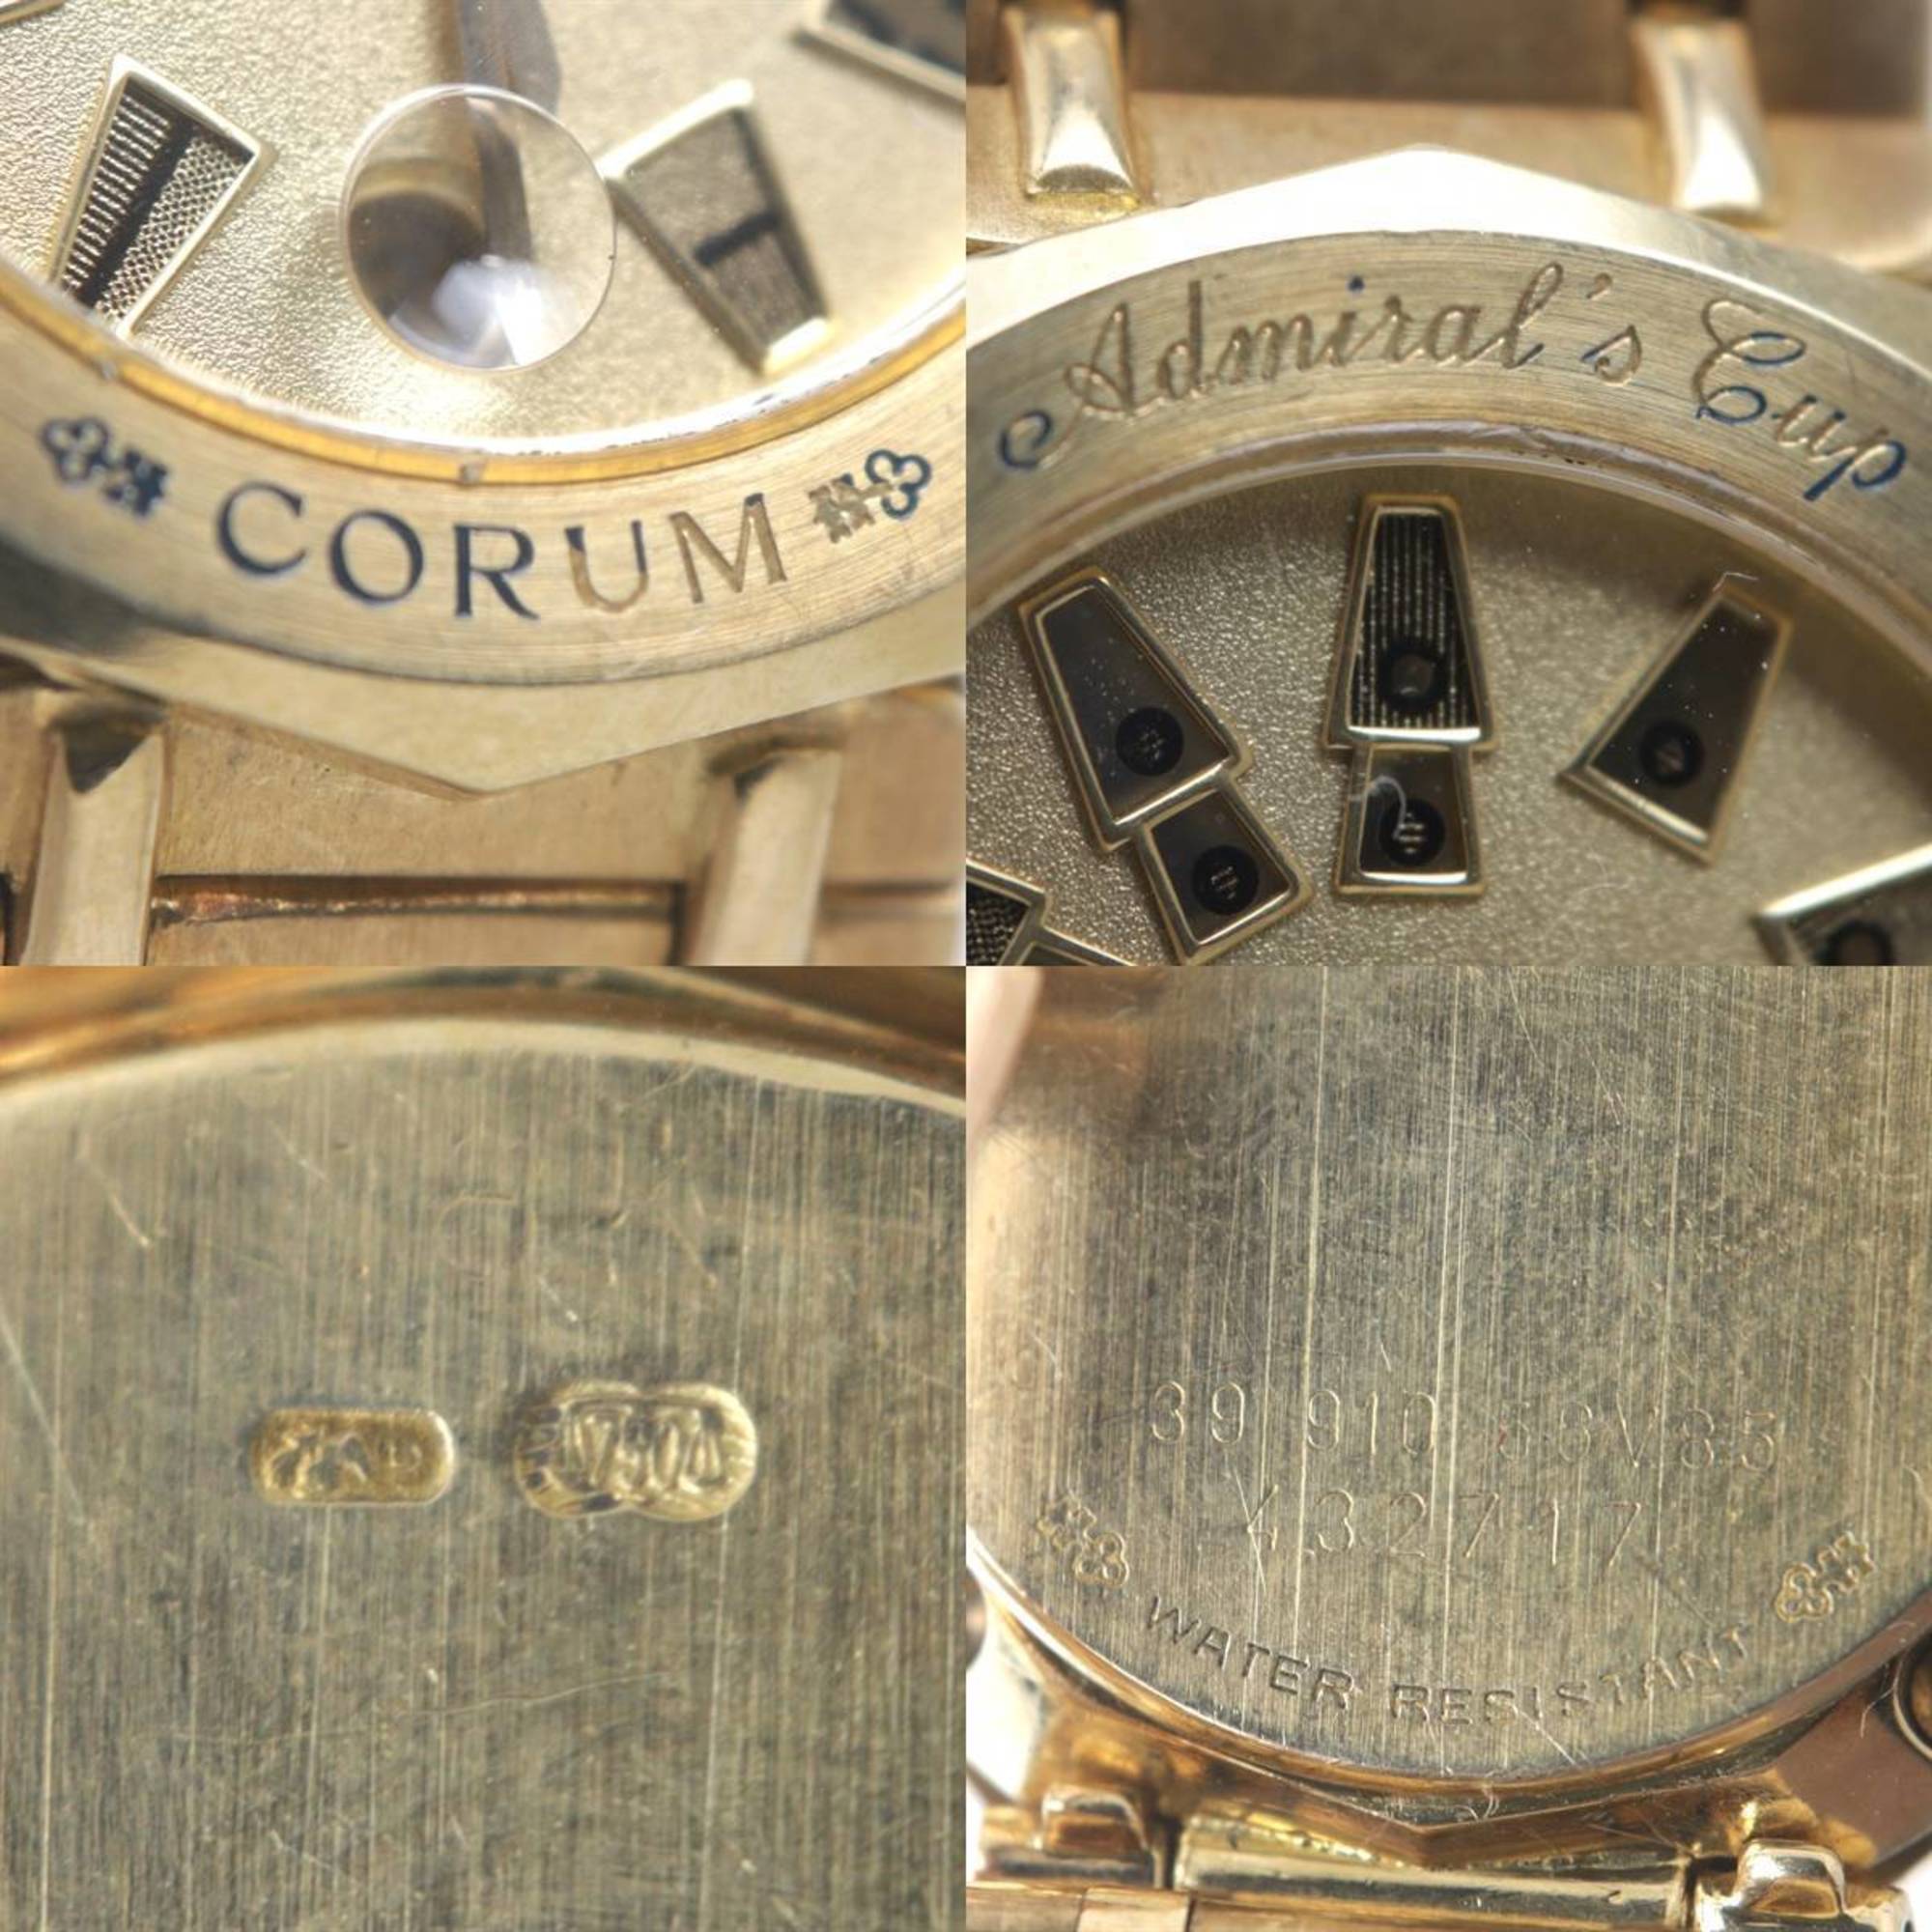 CORUM Admirals Cup Ladies Quartz Watch Solid Gold K18YG 39.910.56V85 Arm circumference approx. 15cm Weight 78.2g